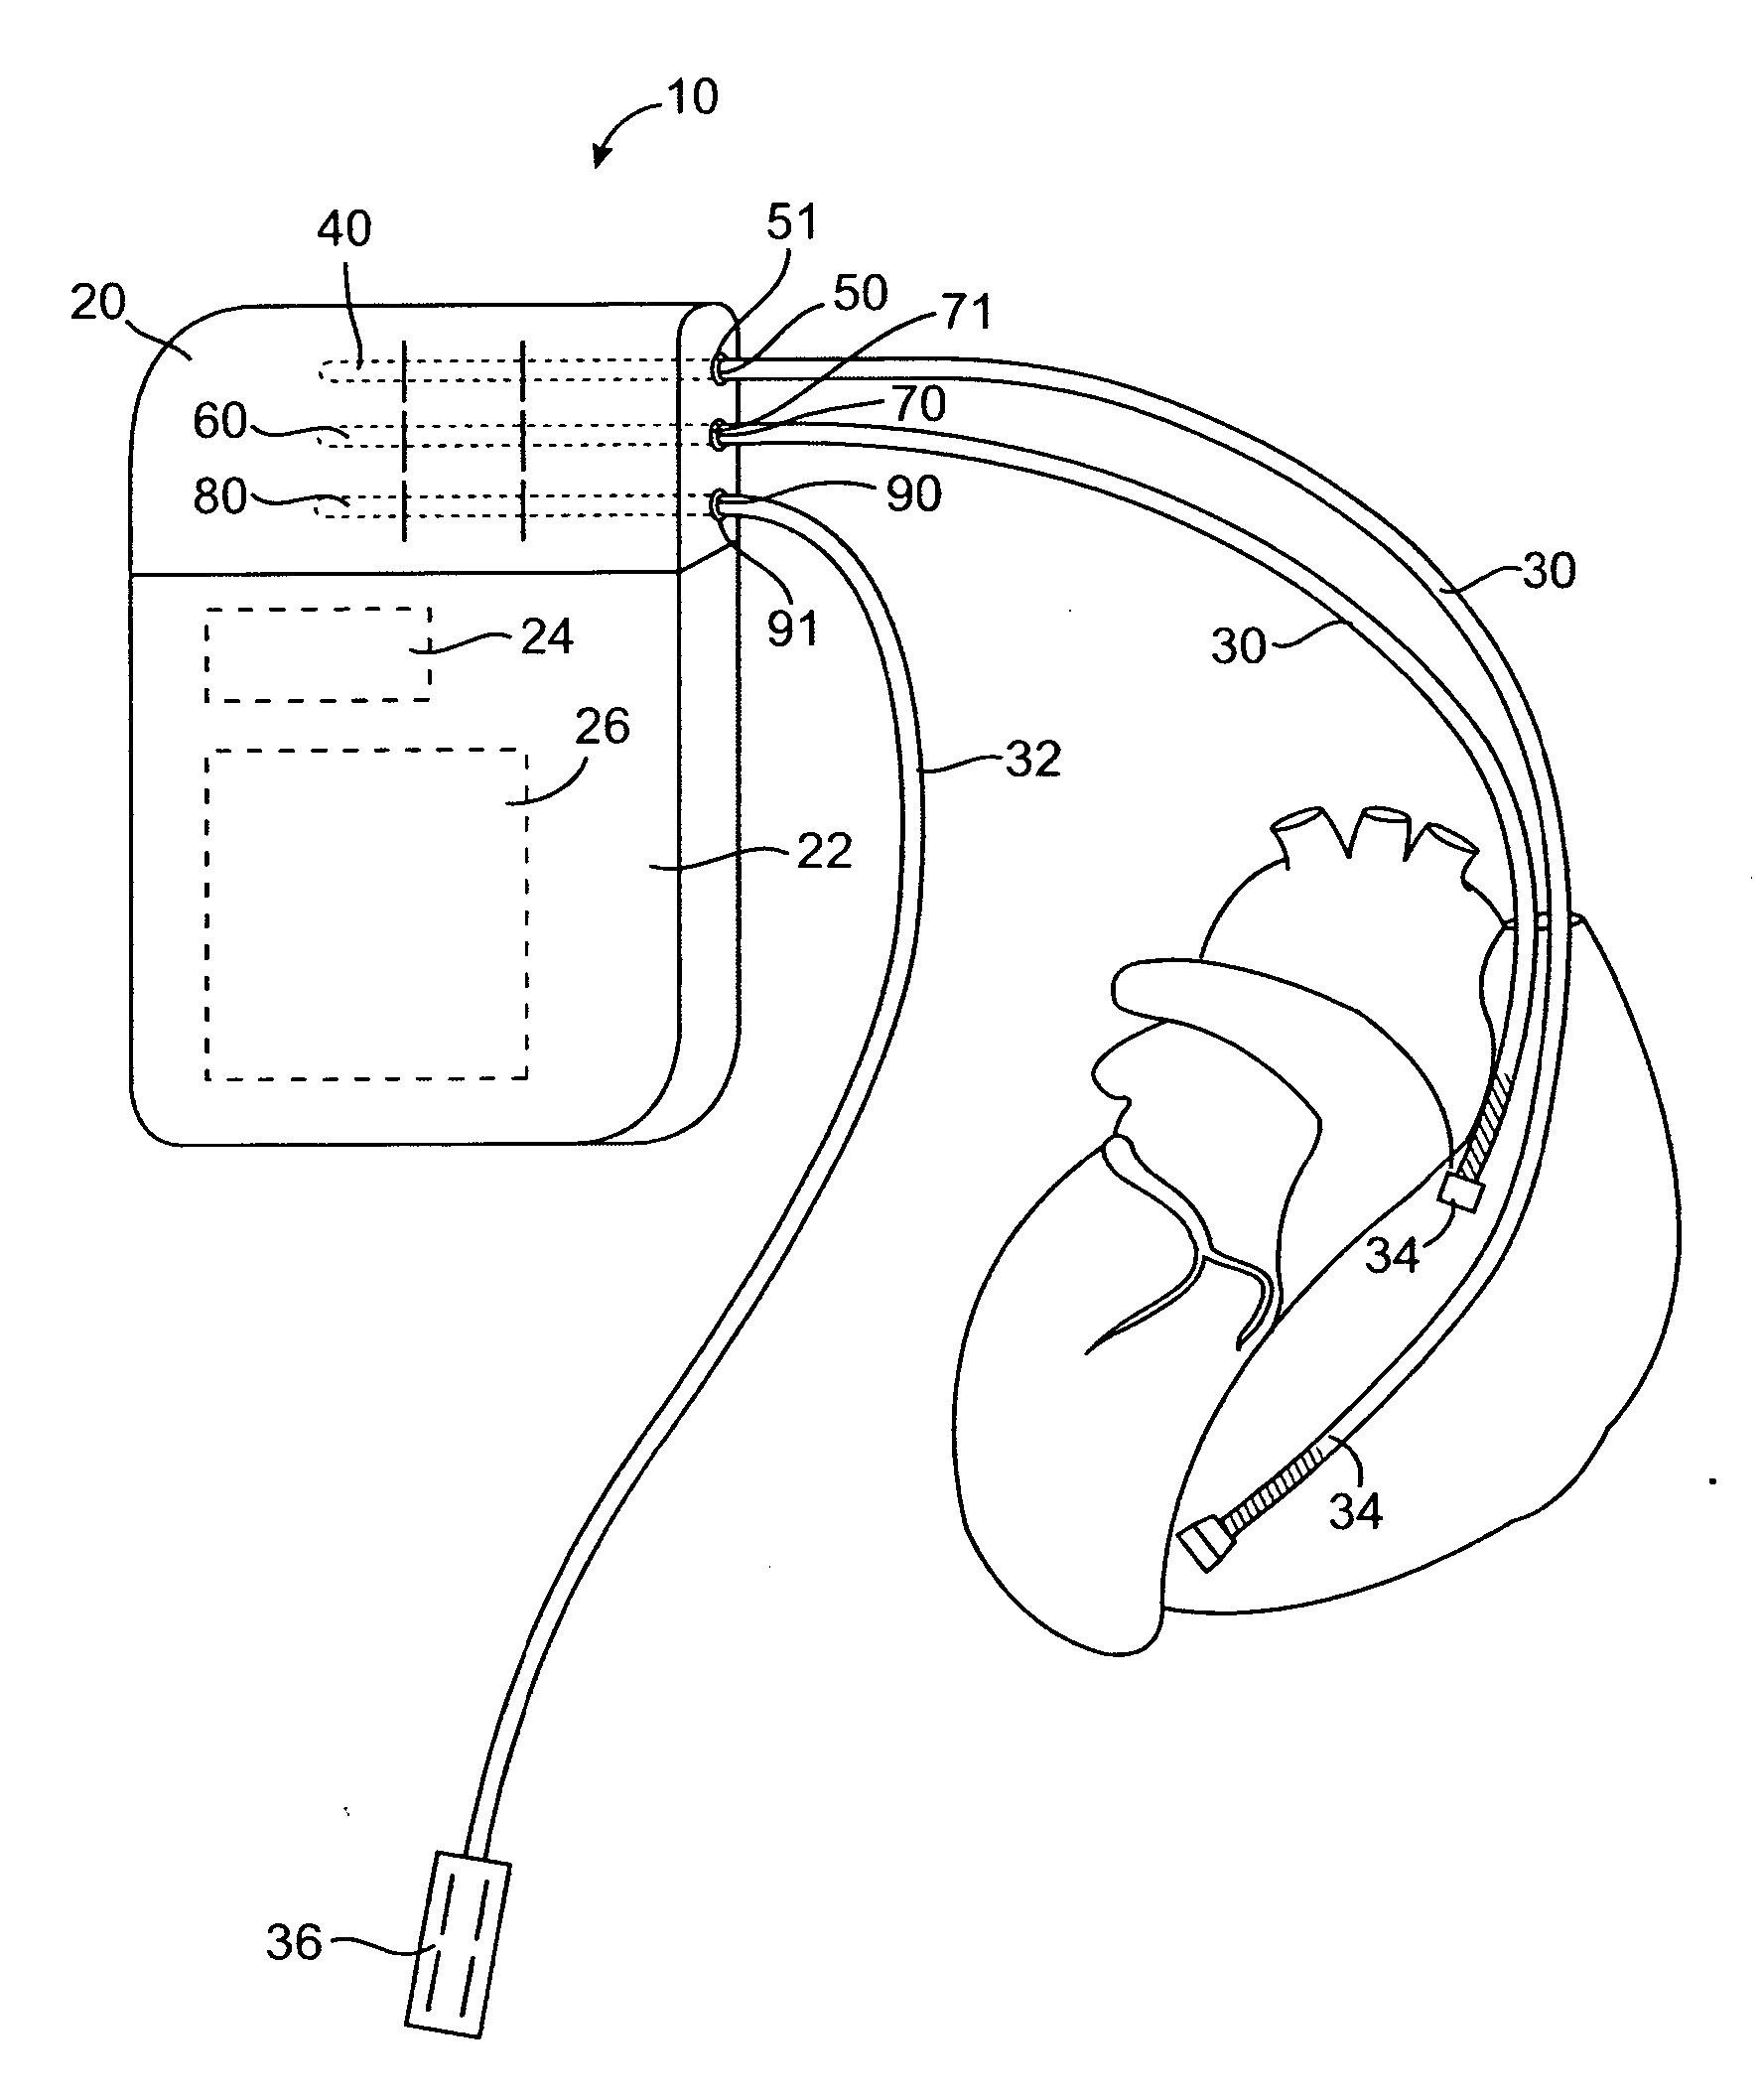 Lockout connector arrangement for implantable medical device